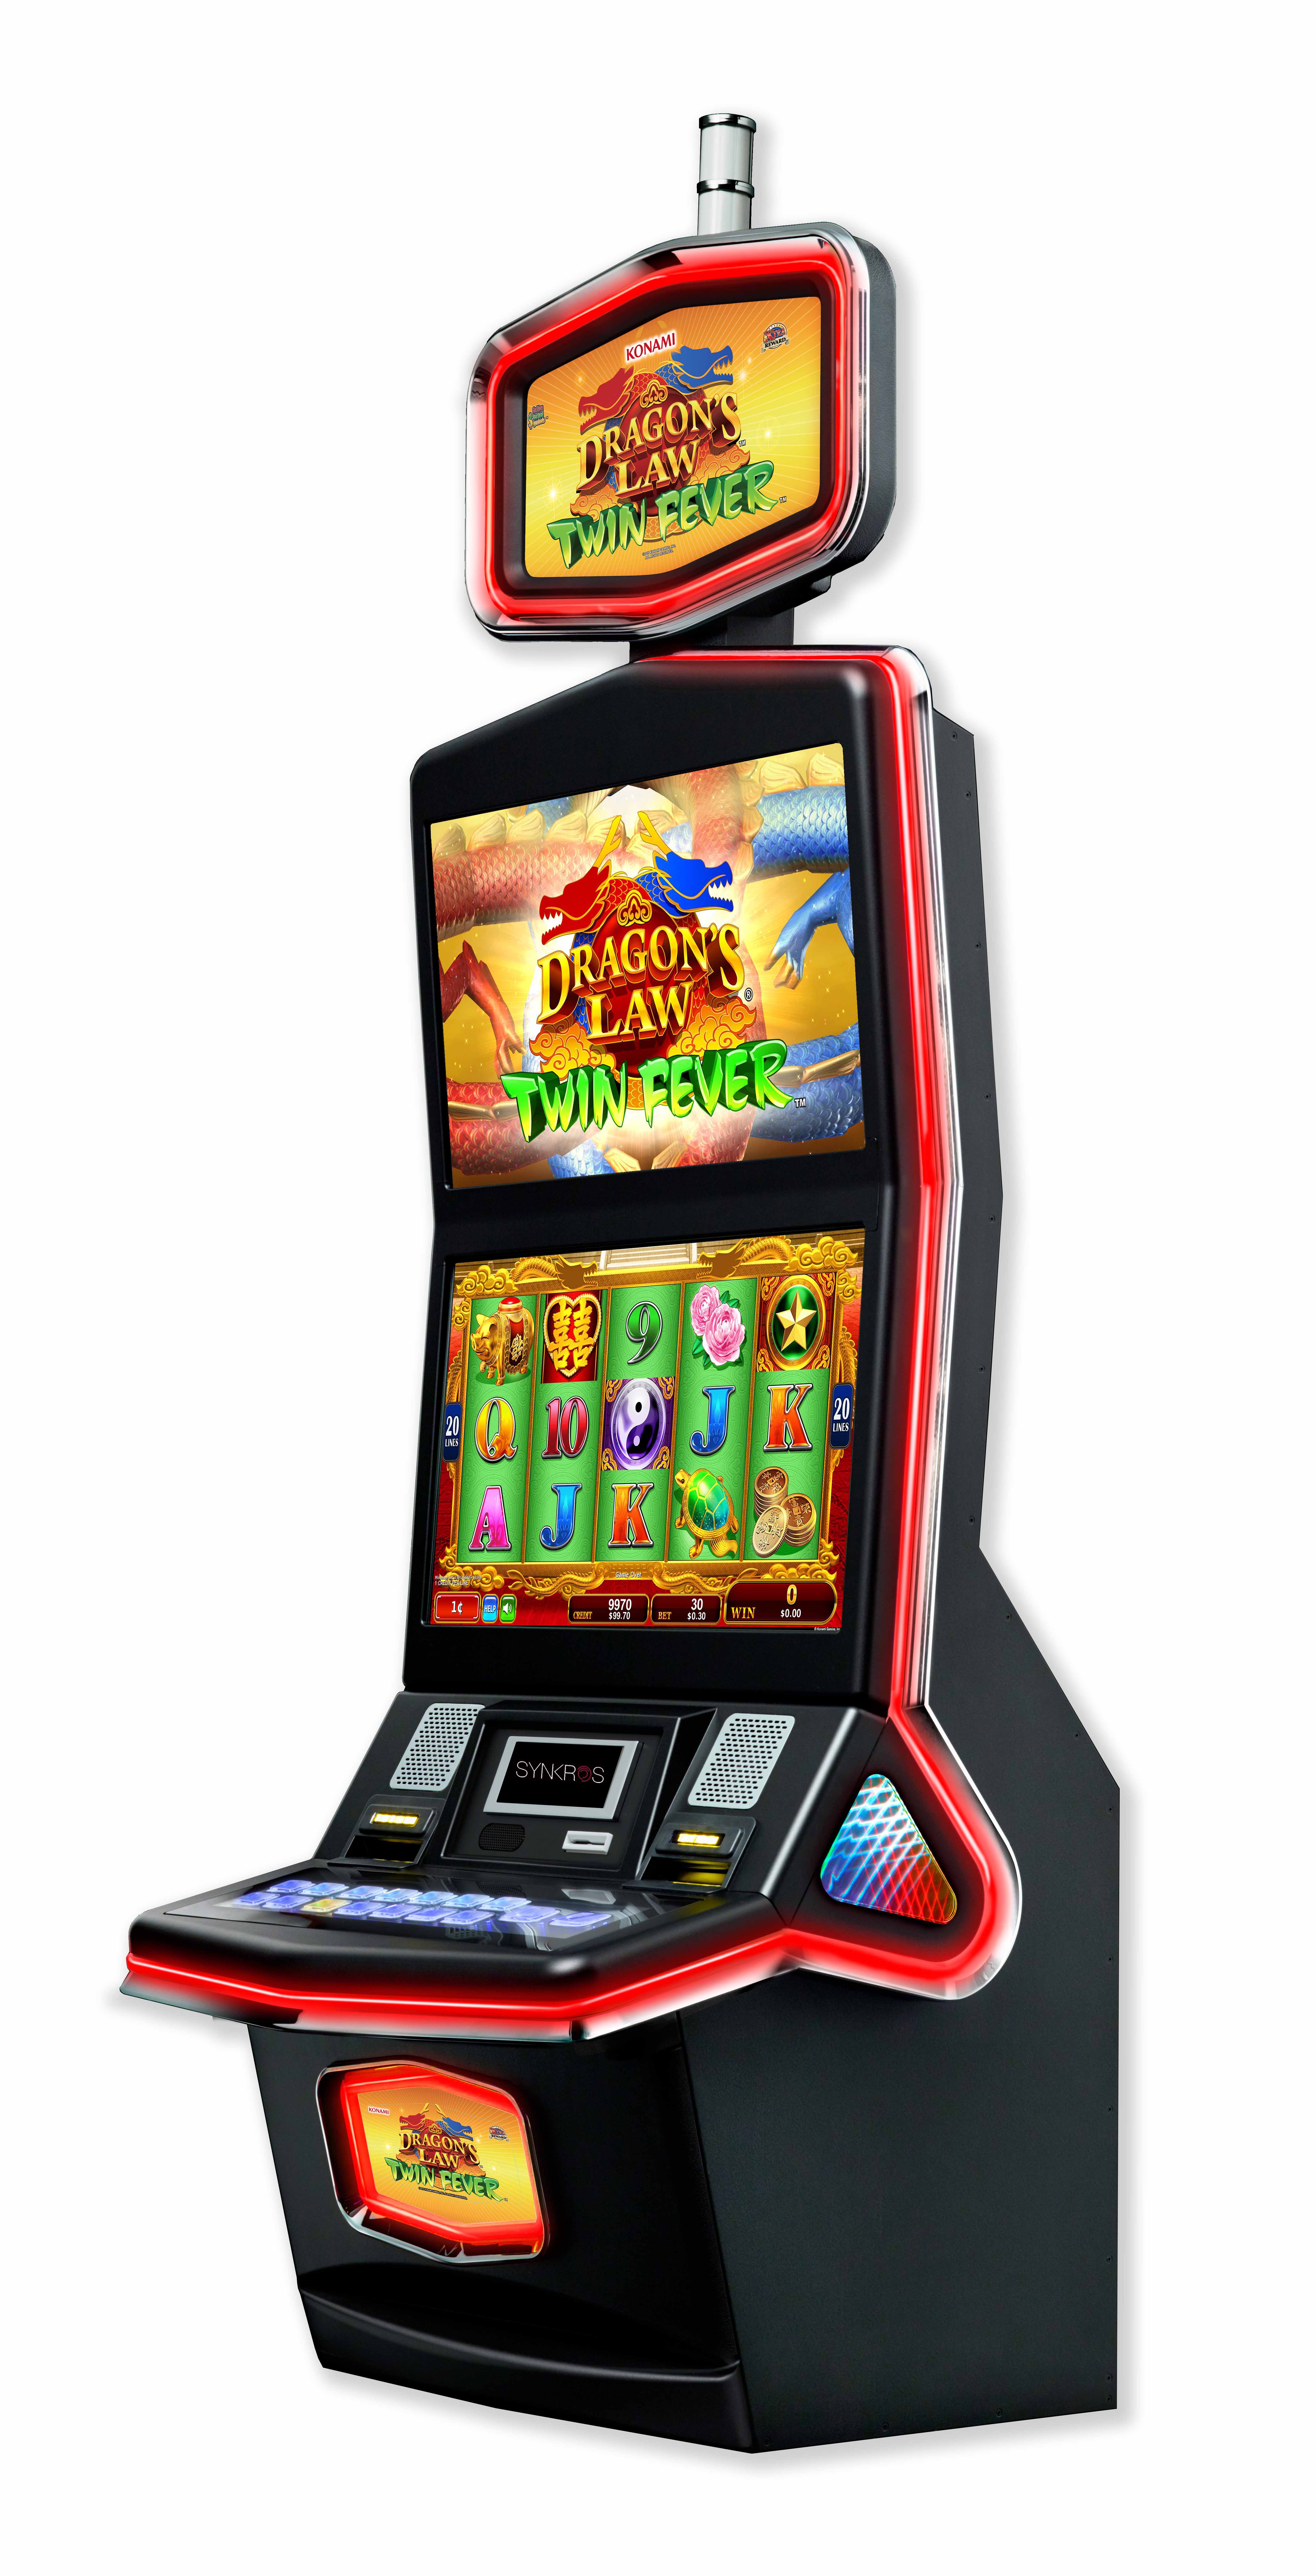 slot machine big win in dania casino